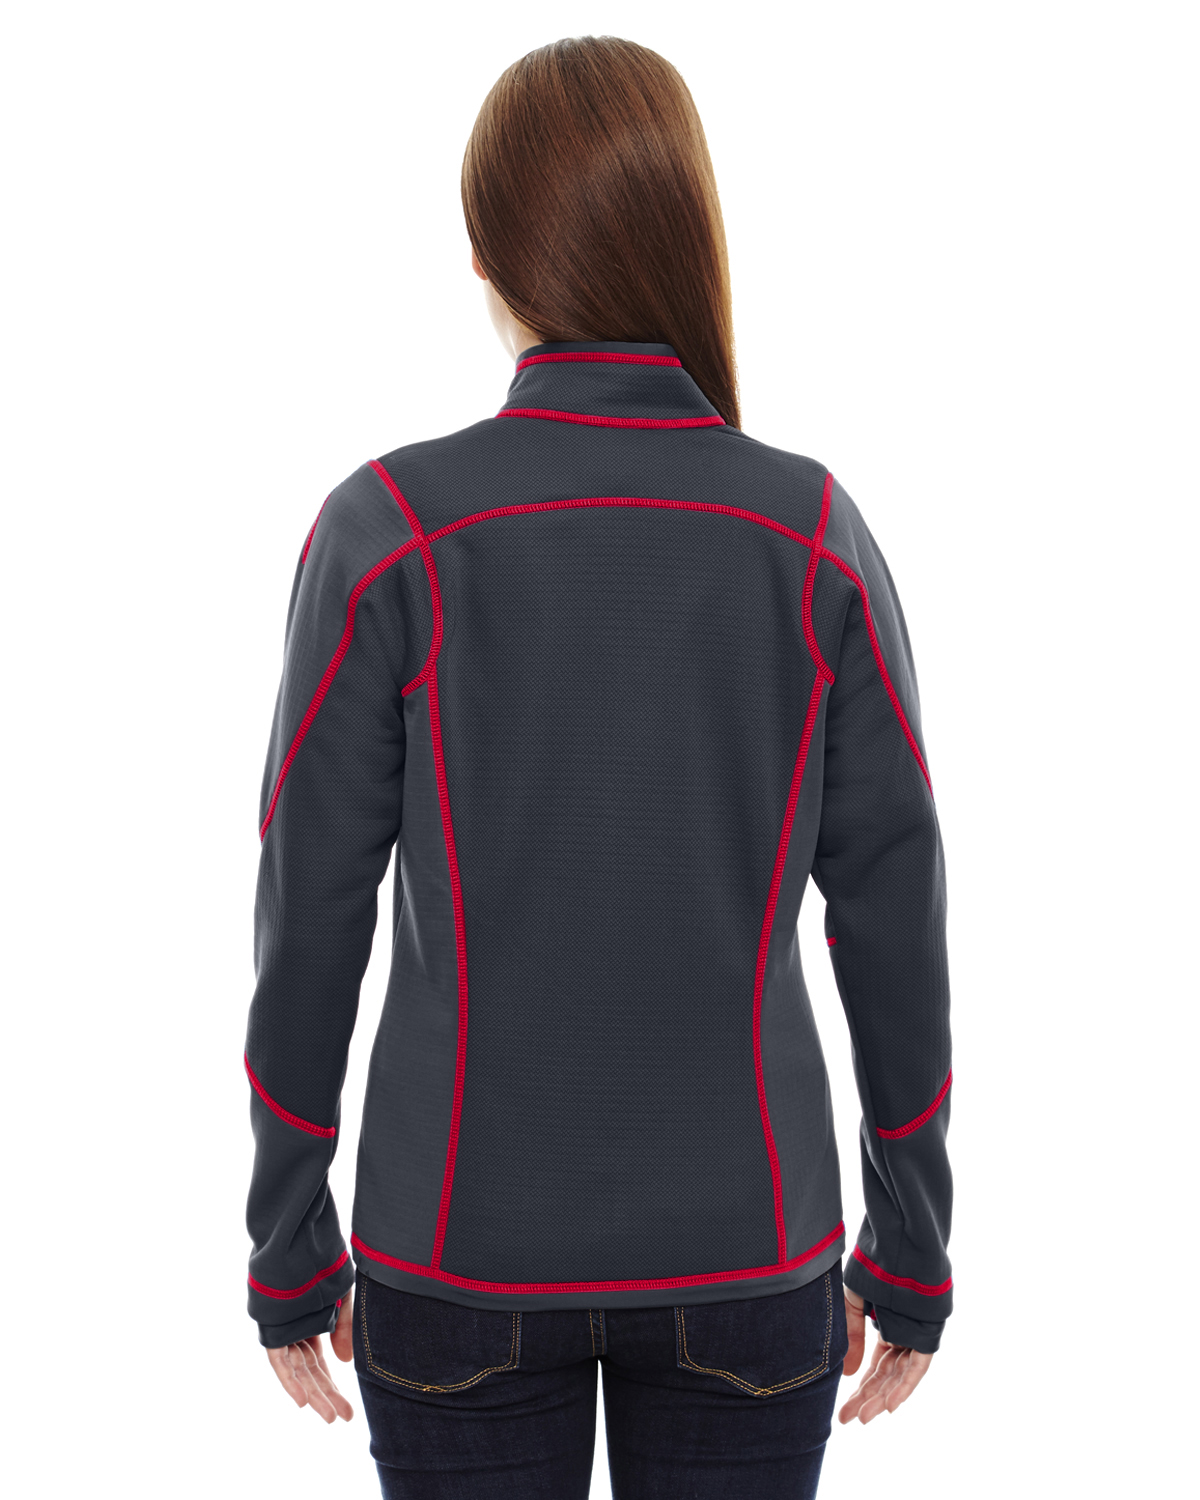 78681 North End Ladies' Pulse Textured Bonded Fleece Jacket with Print